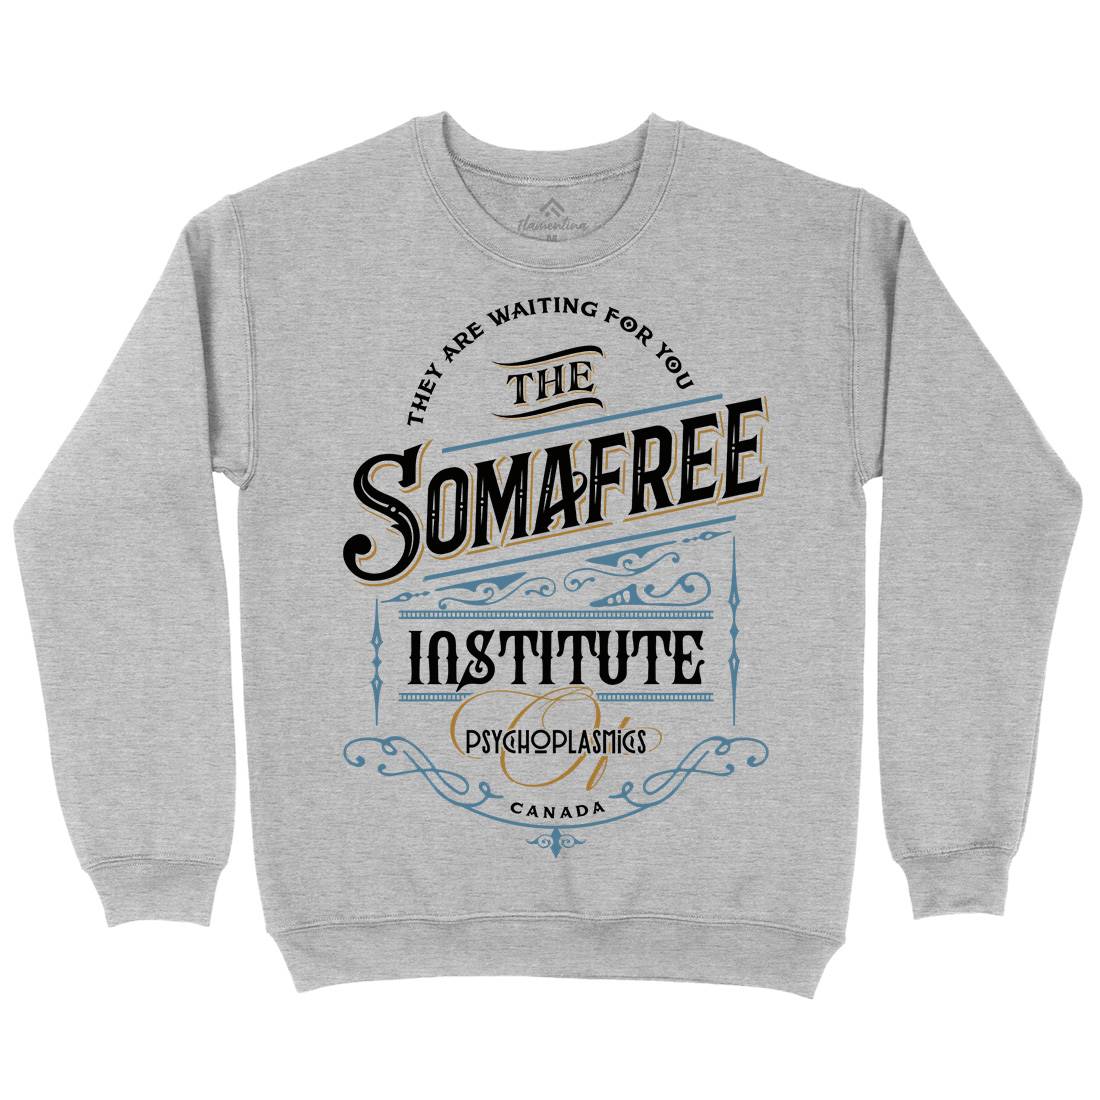 Somafree Institute Mens Crew Neck Sweatshirt Horror D345